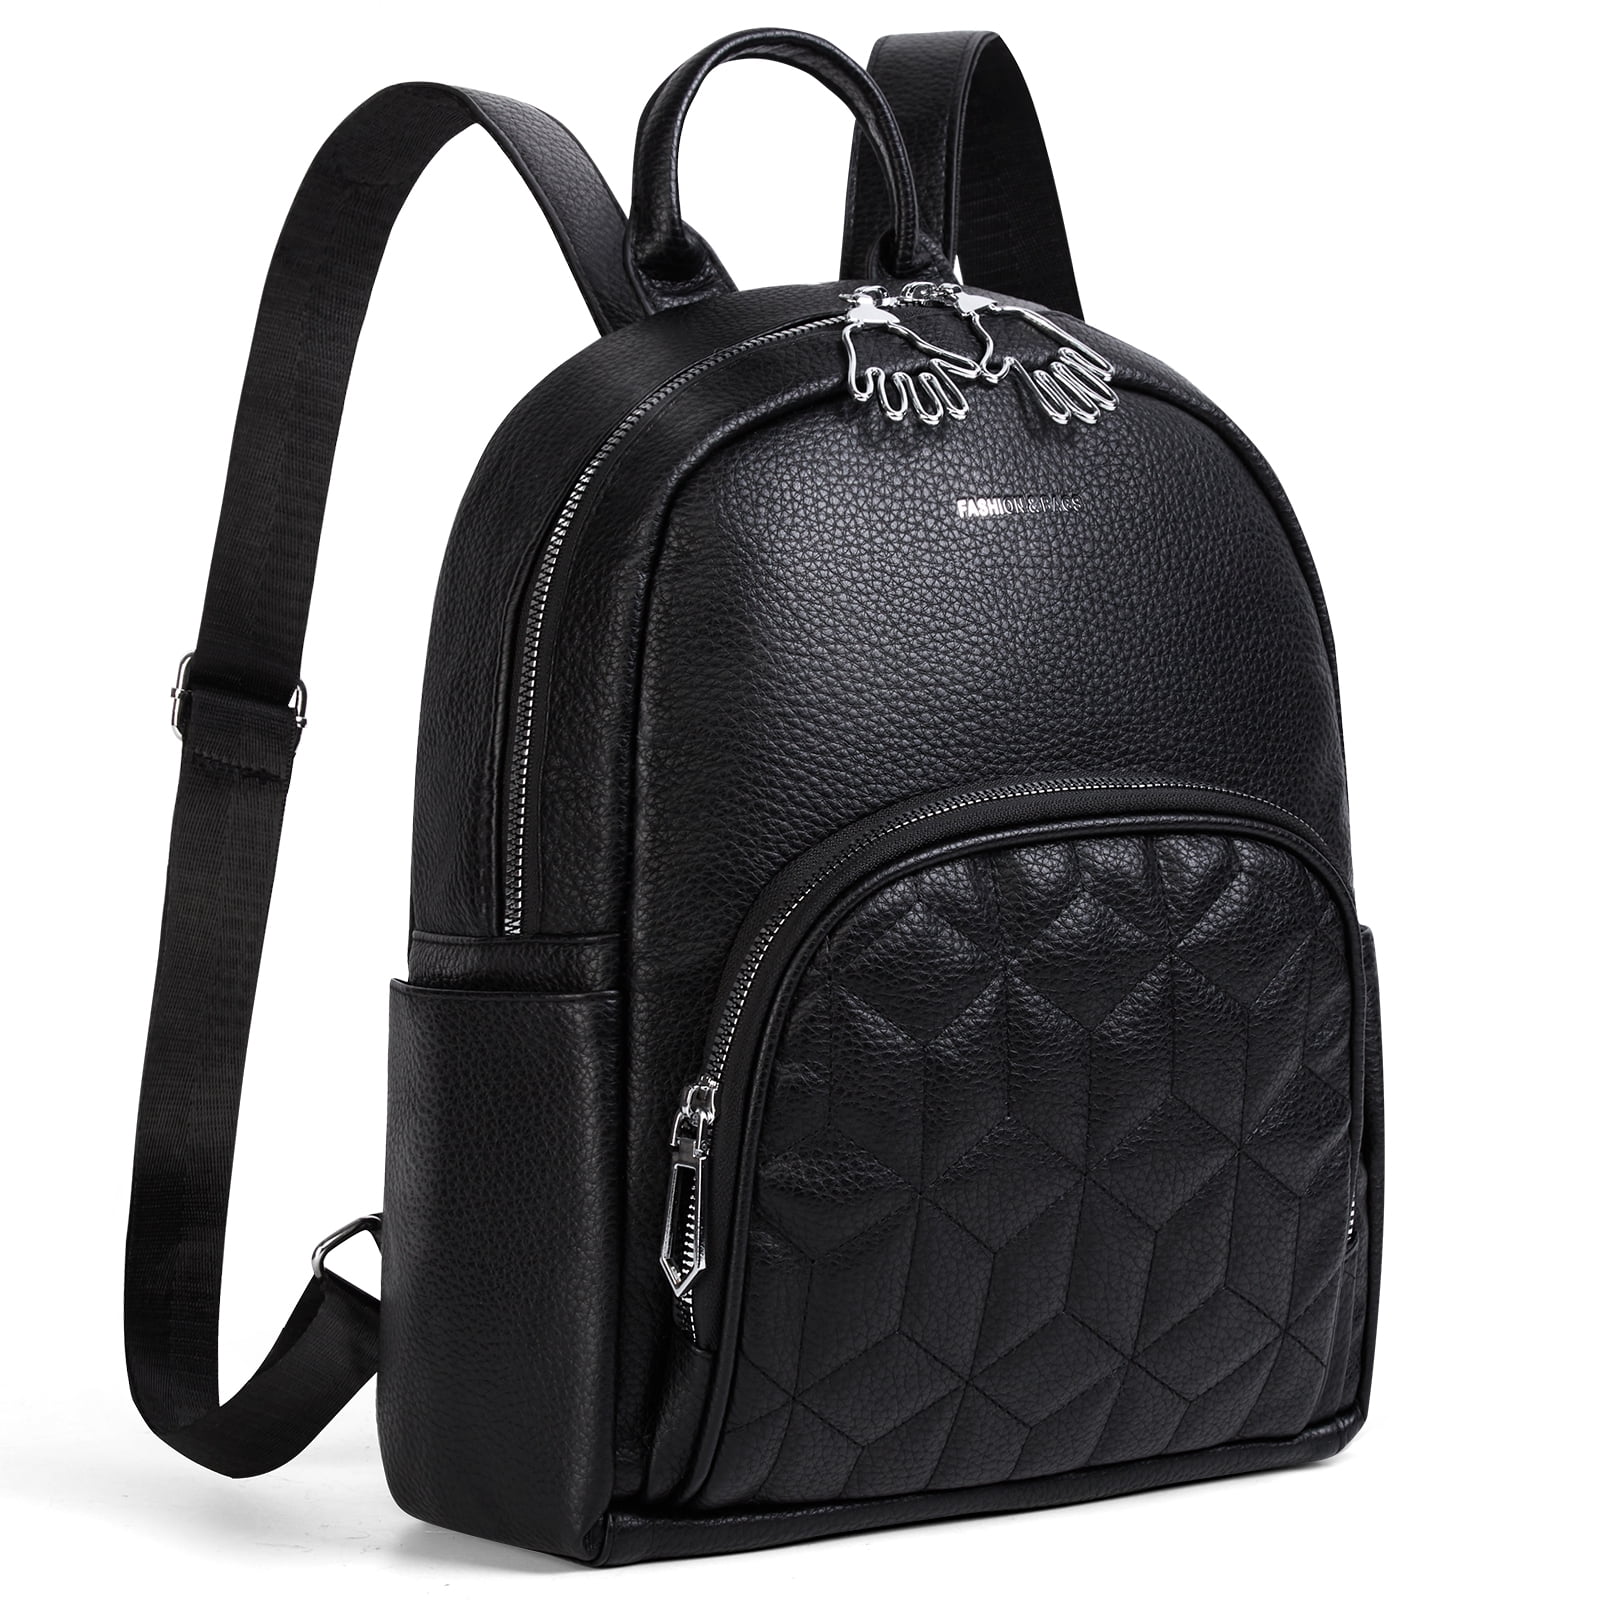 Vbiger Backpack Purse for Women, Waterproof PU Leather Travel Backpacks ...